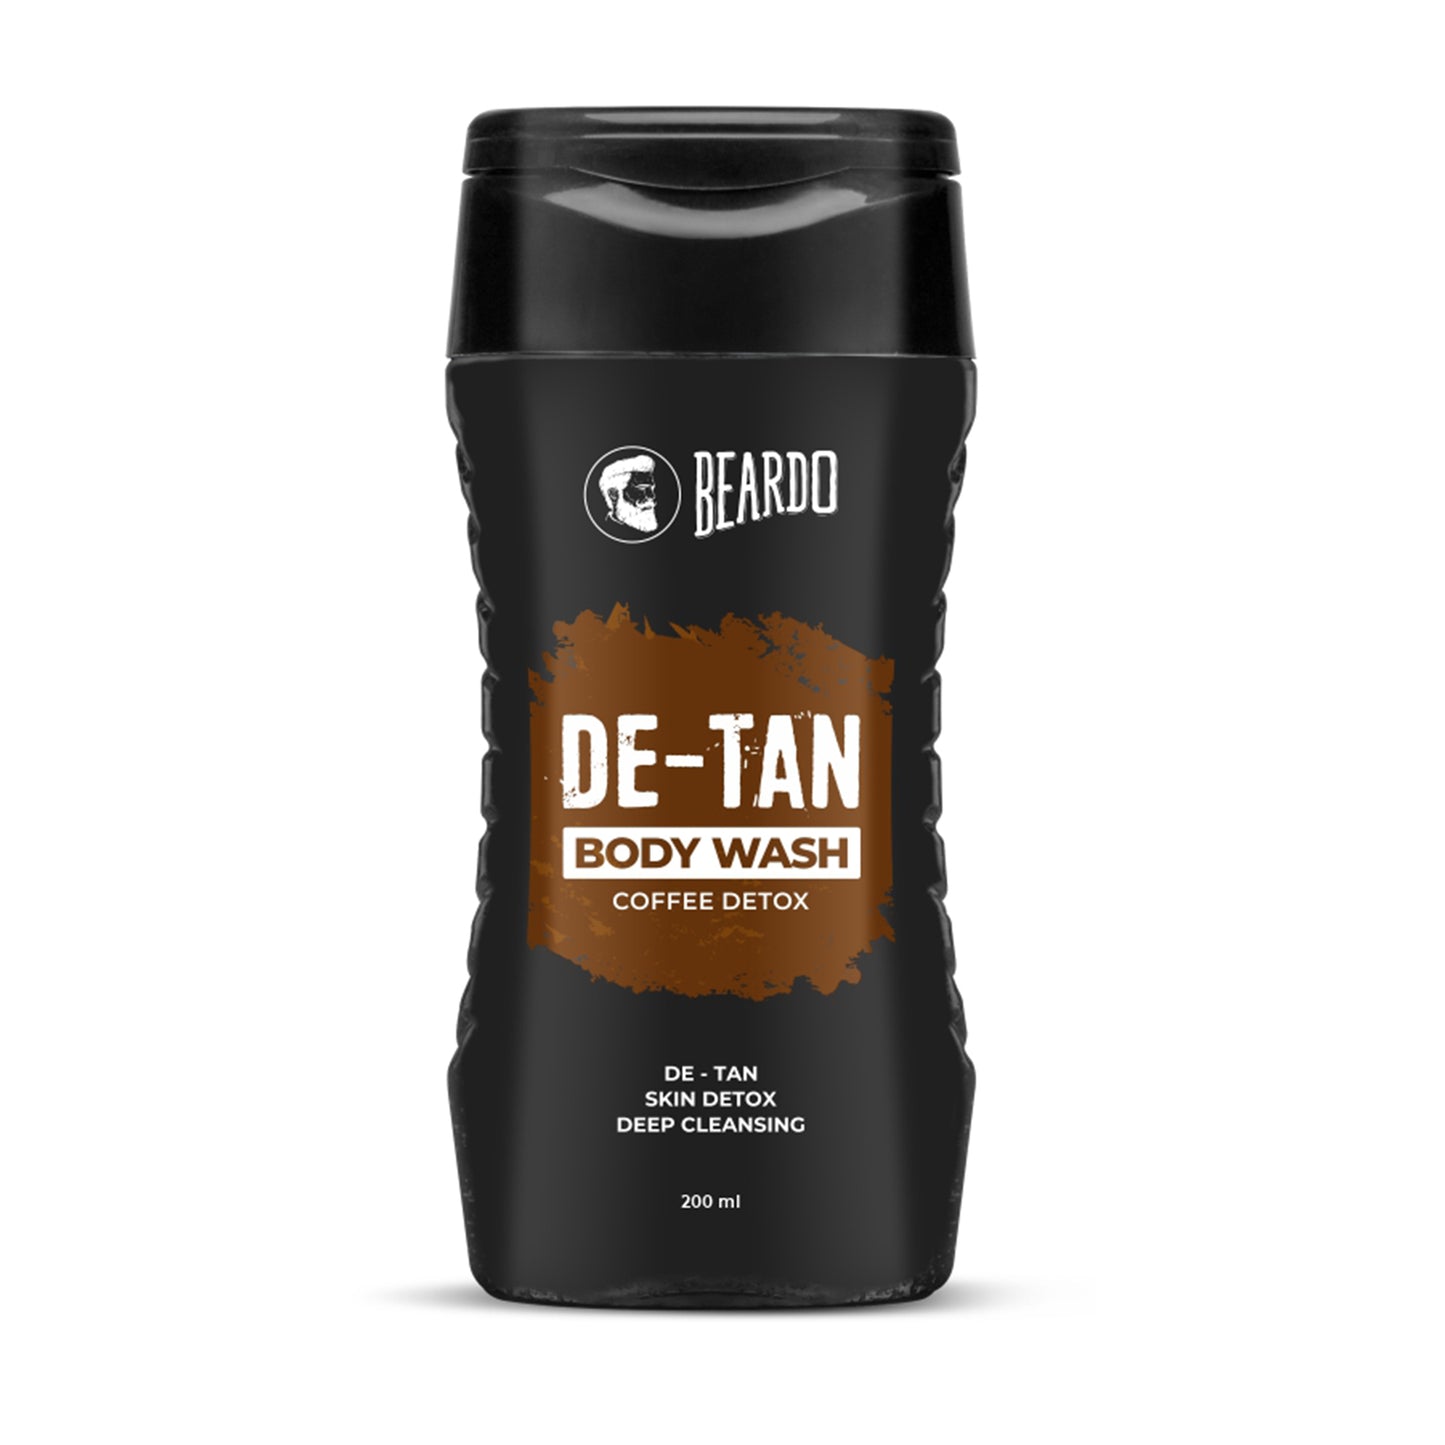 de tan body wash for men, deep cleansing, deep cleansing body wash for men, beardo body wash, coffee body wash, coffee shower gel